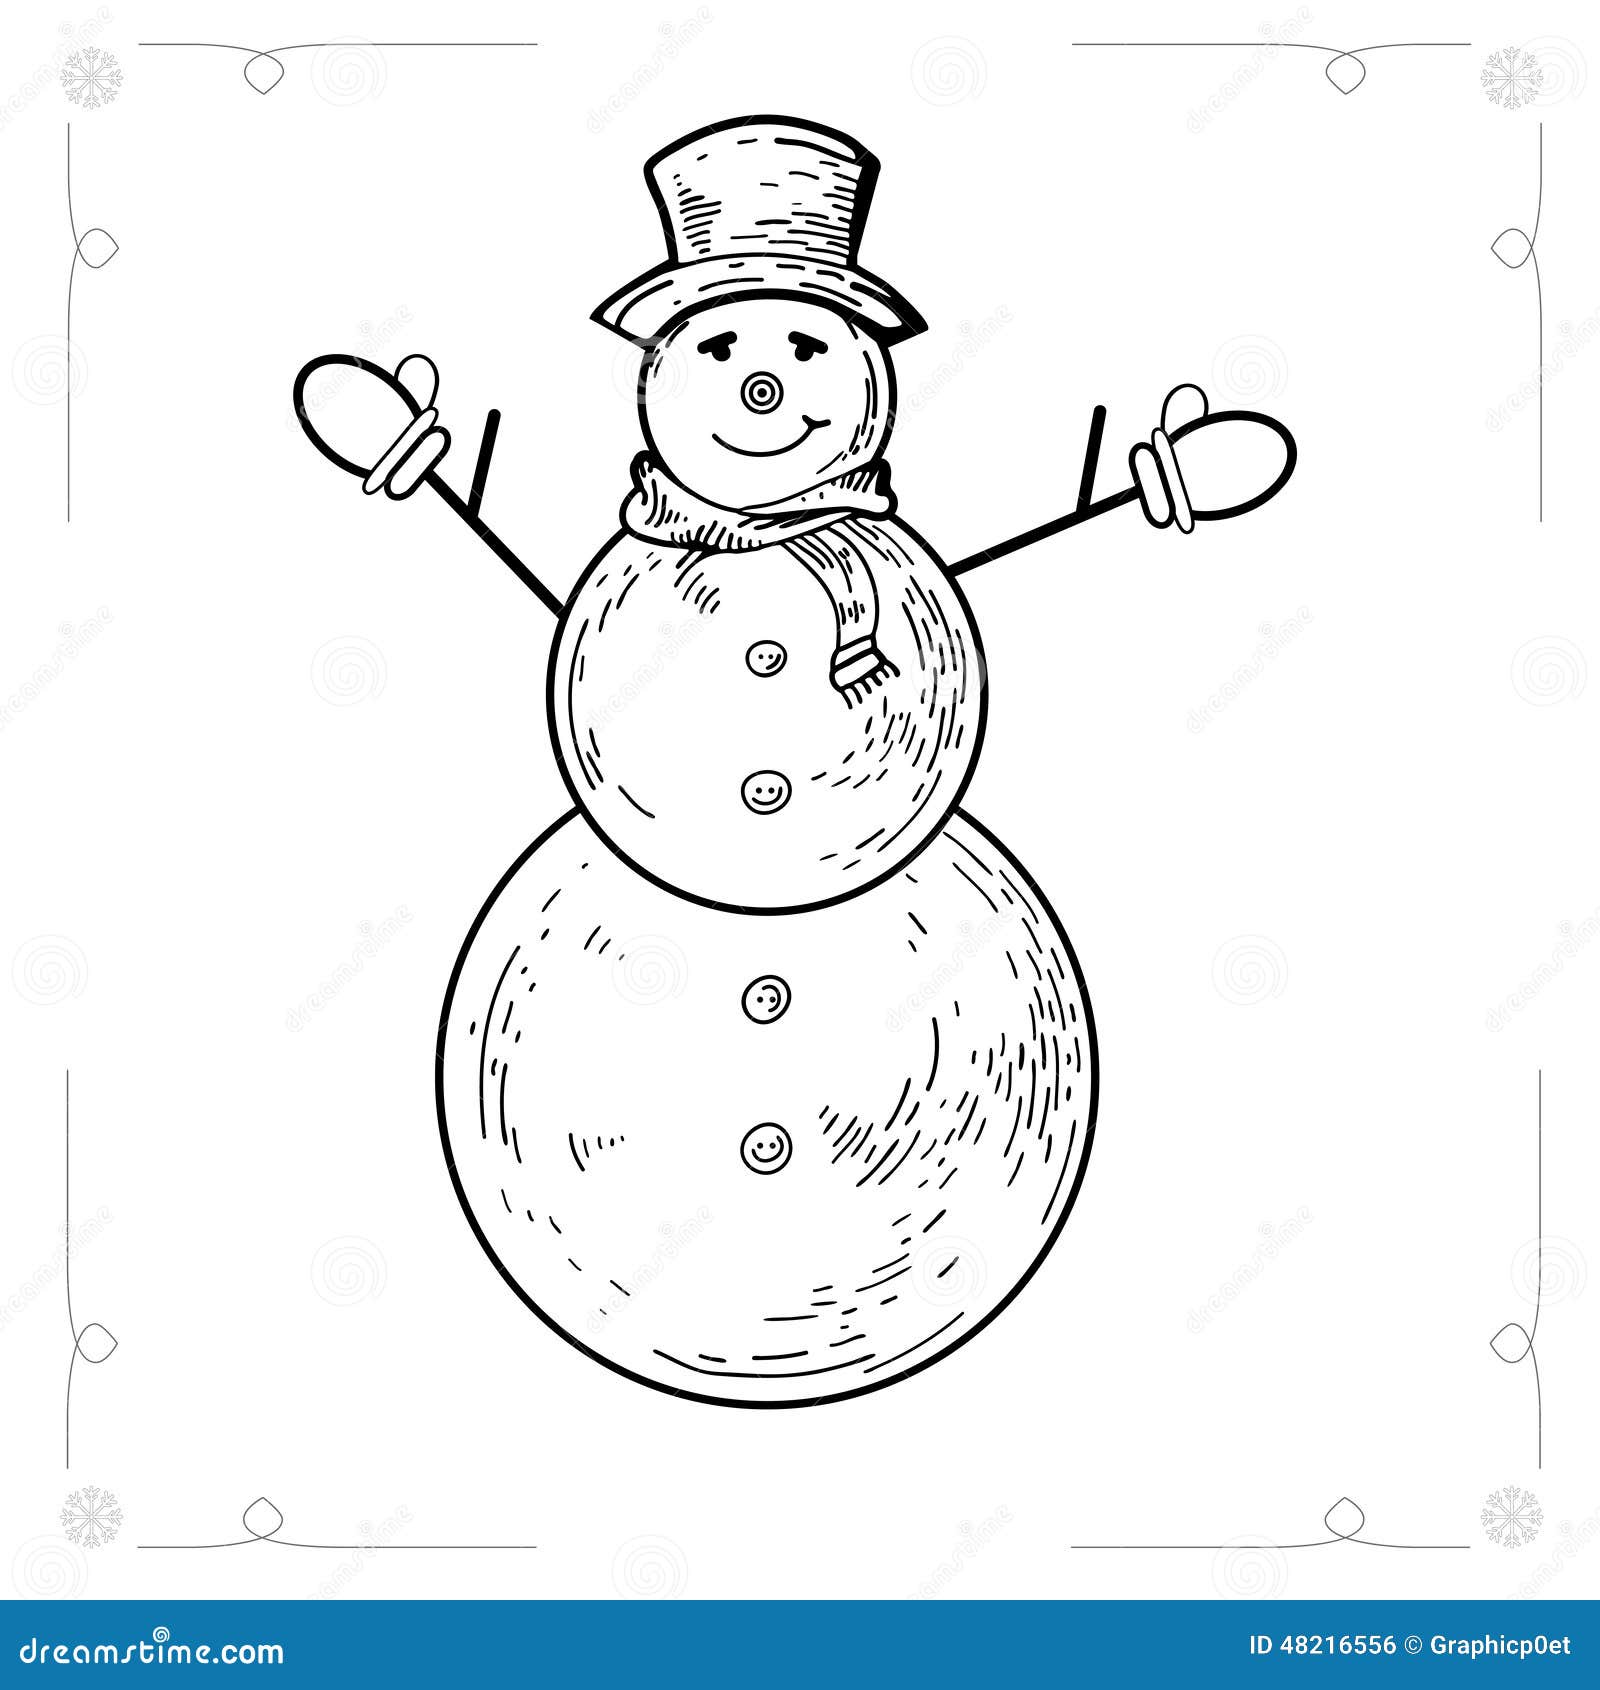 Snowmen Isolated on White Background Stock Vector - Illustration of ...